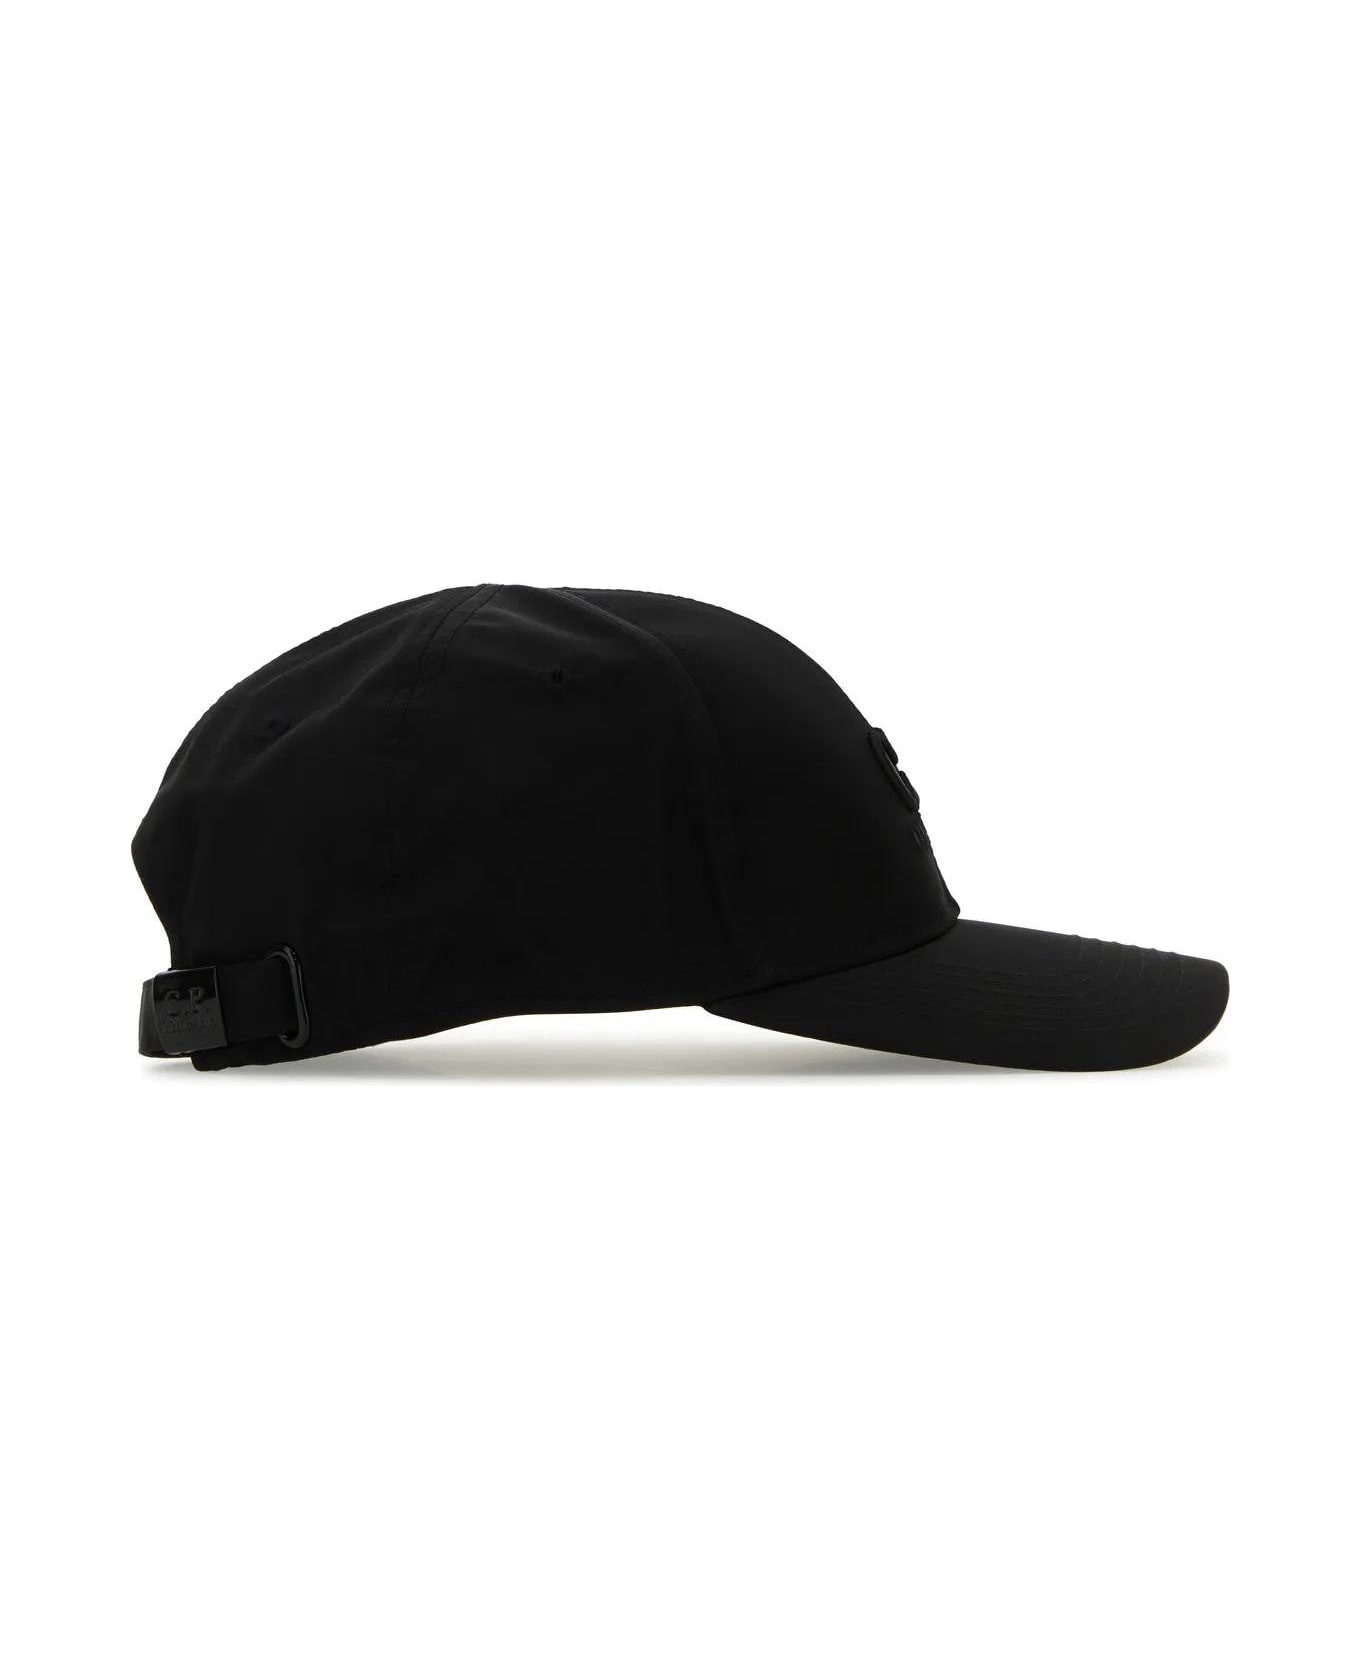 C.P. Company Black Nylon Baseball Cap - Black